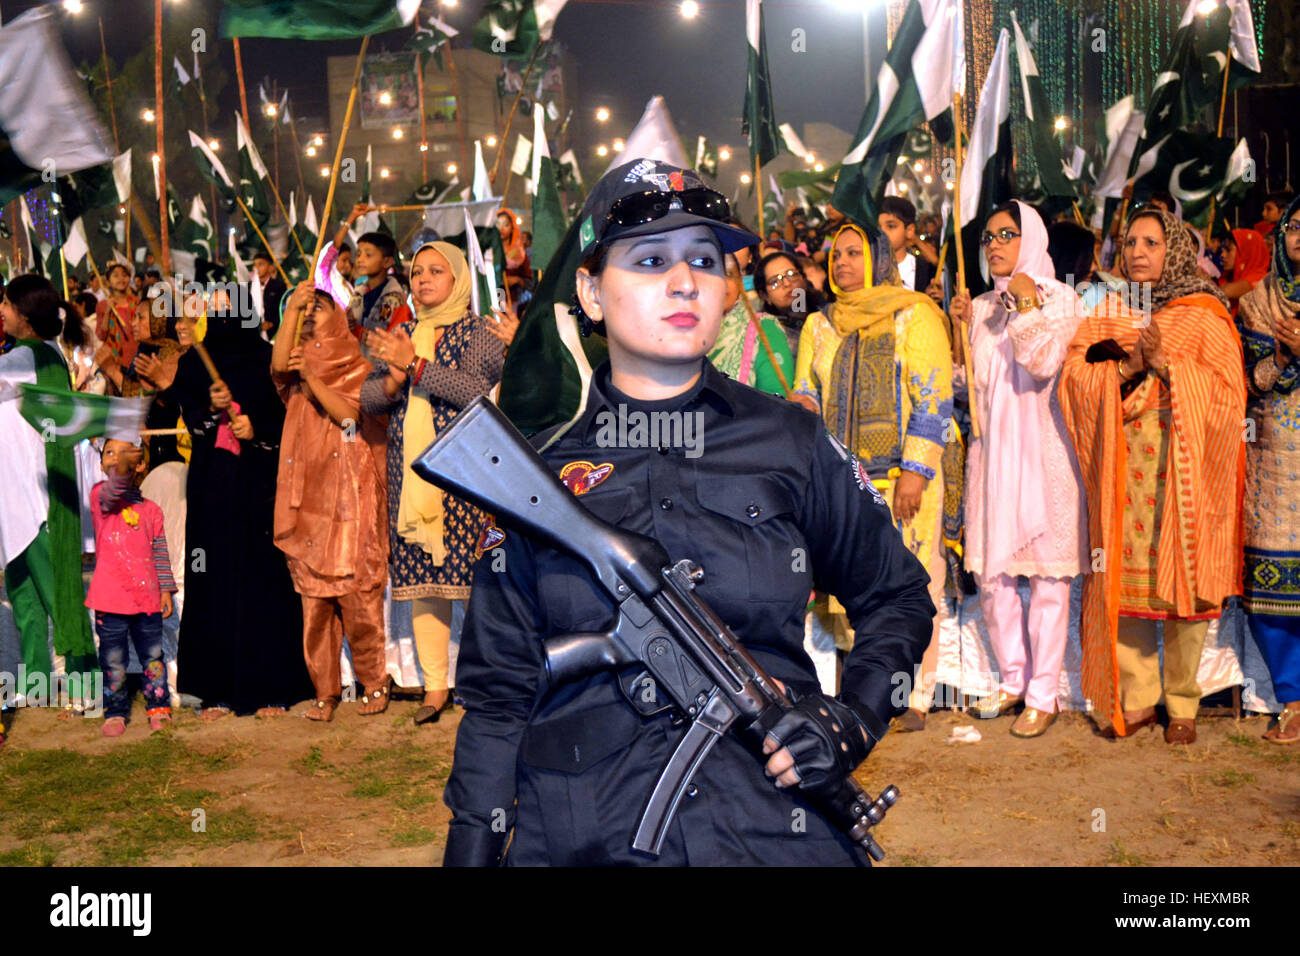 hyderabad-pakistan-23rd-dec-2016-a-lady-police-commando-stand-alert-HEXMBR.jpg